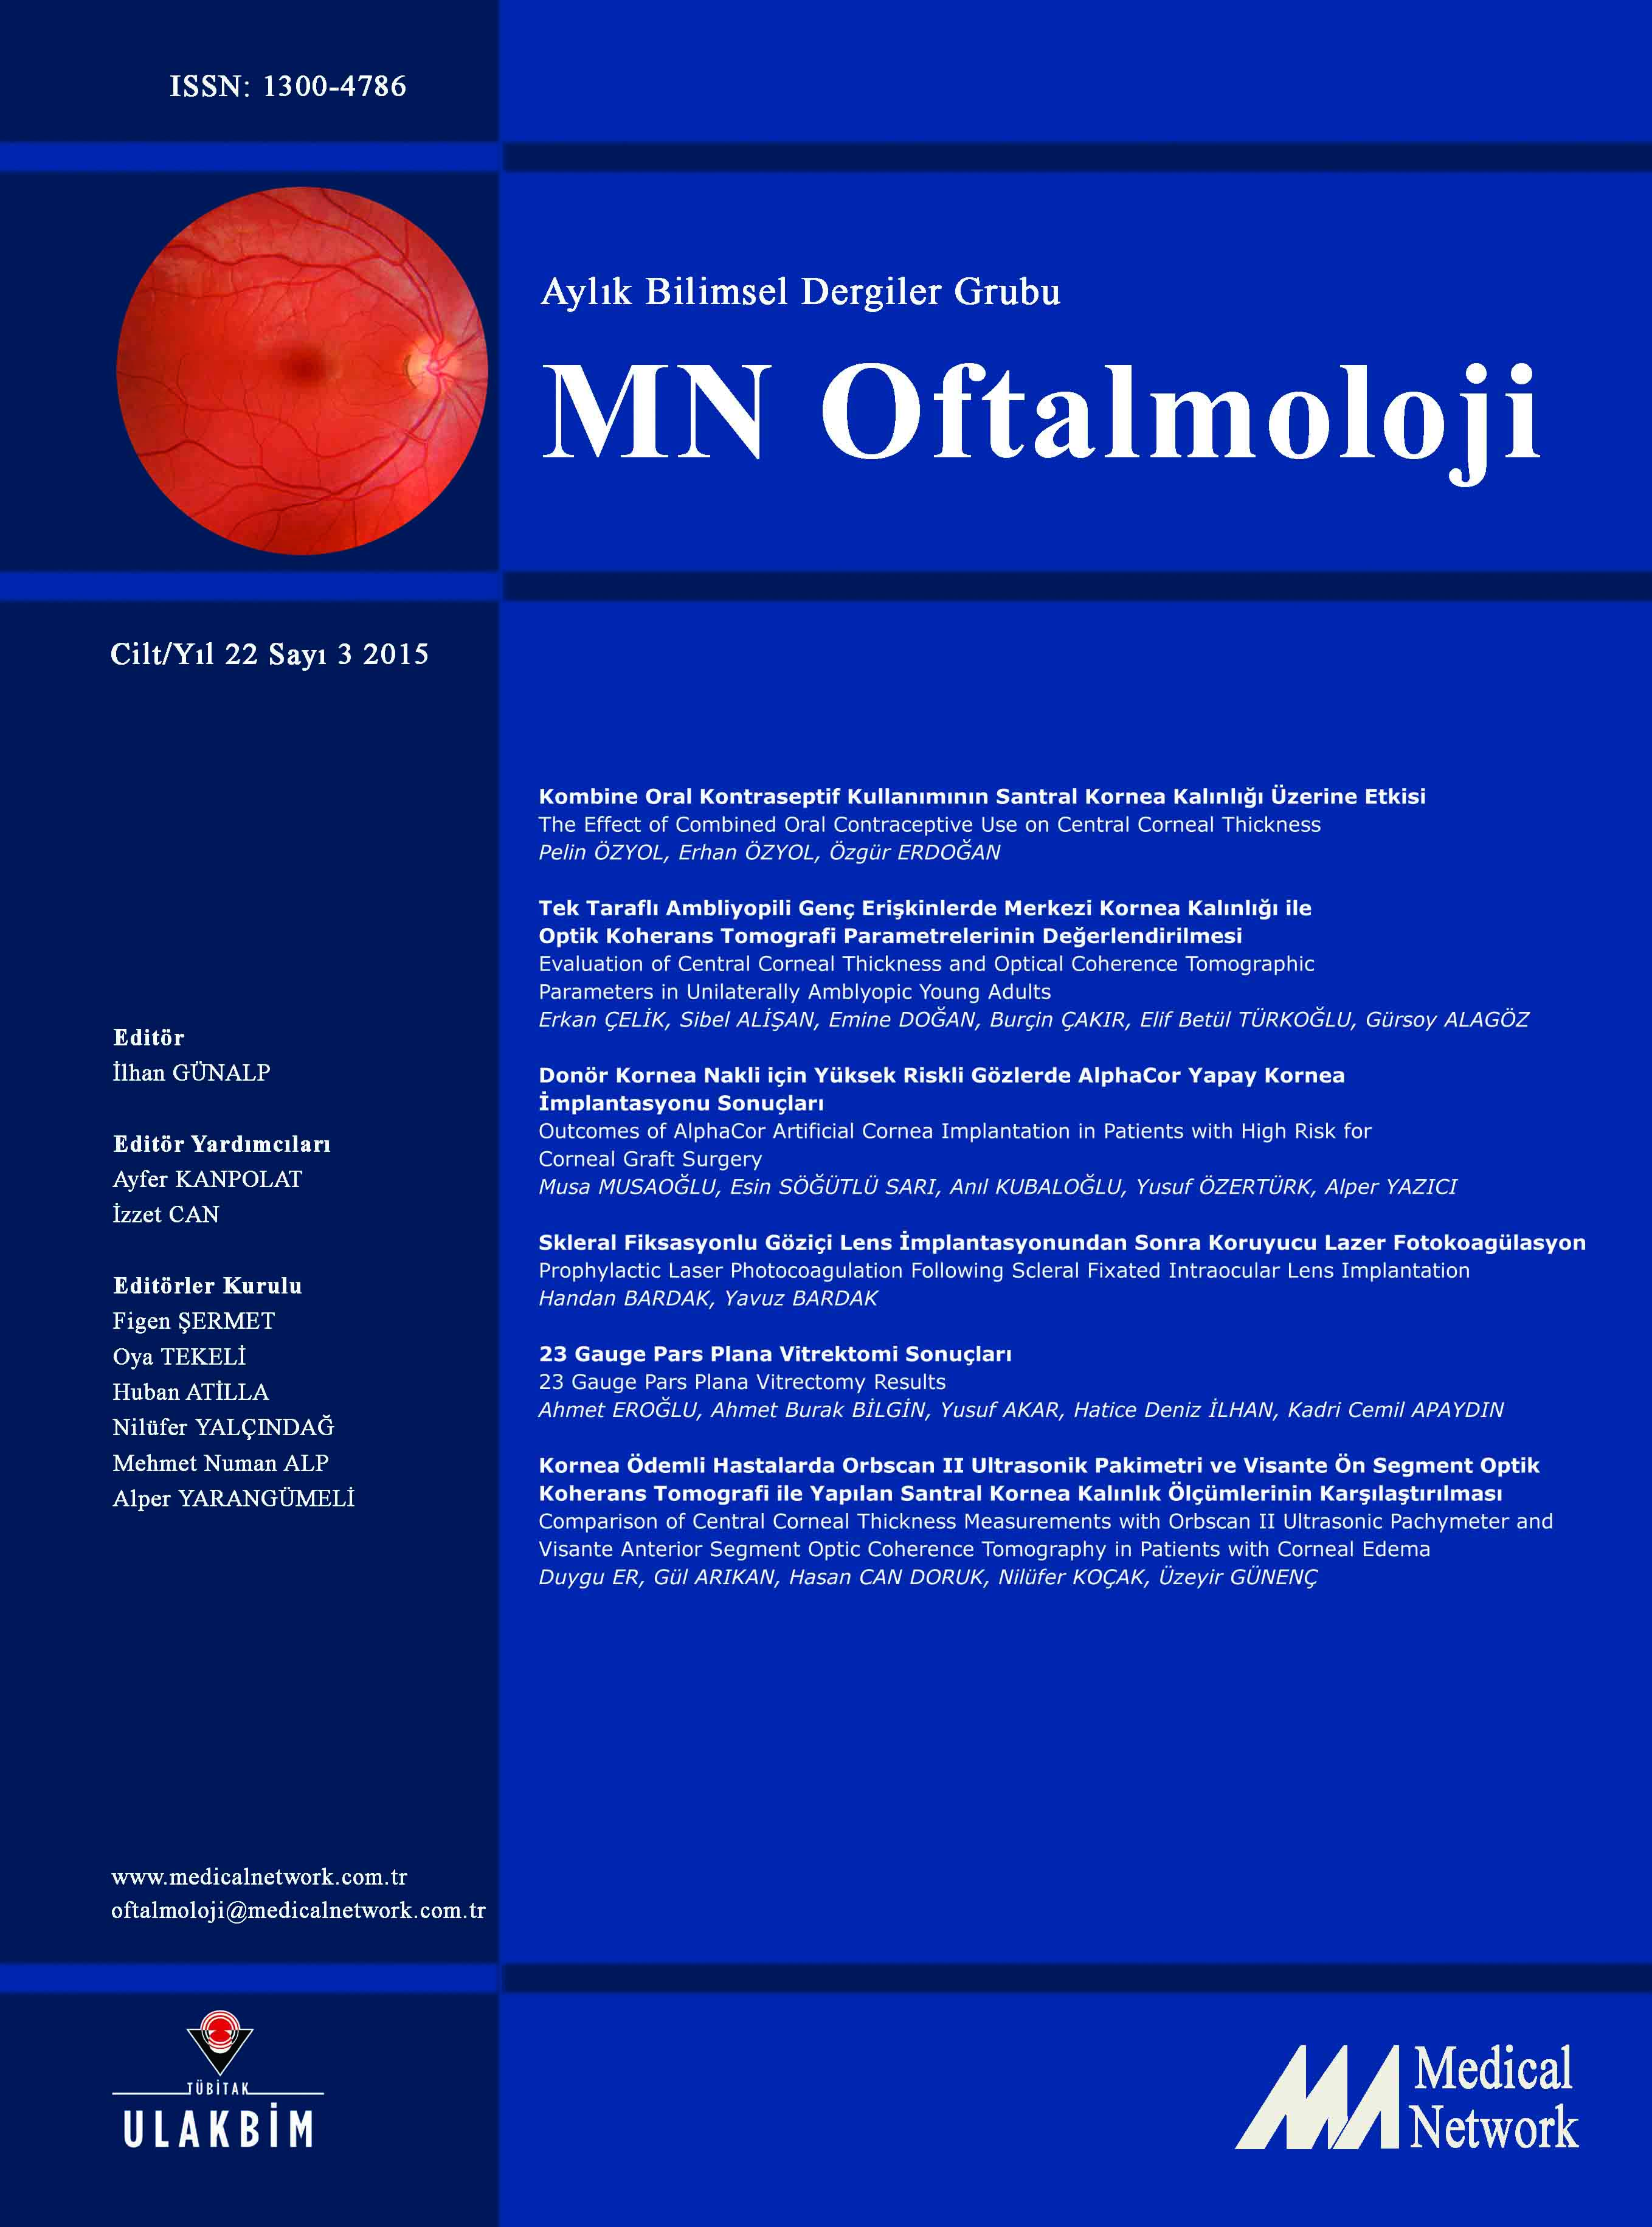 <p>MN Oftalmoloji Cilt: 22 Sayı: 3 2015 (MN Ophthalmology Volume: 22 No 3 2015)</p>